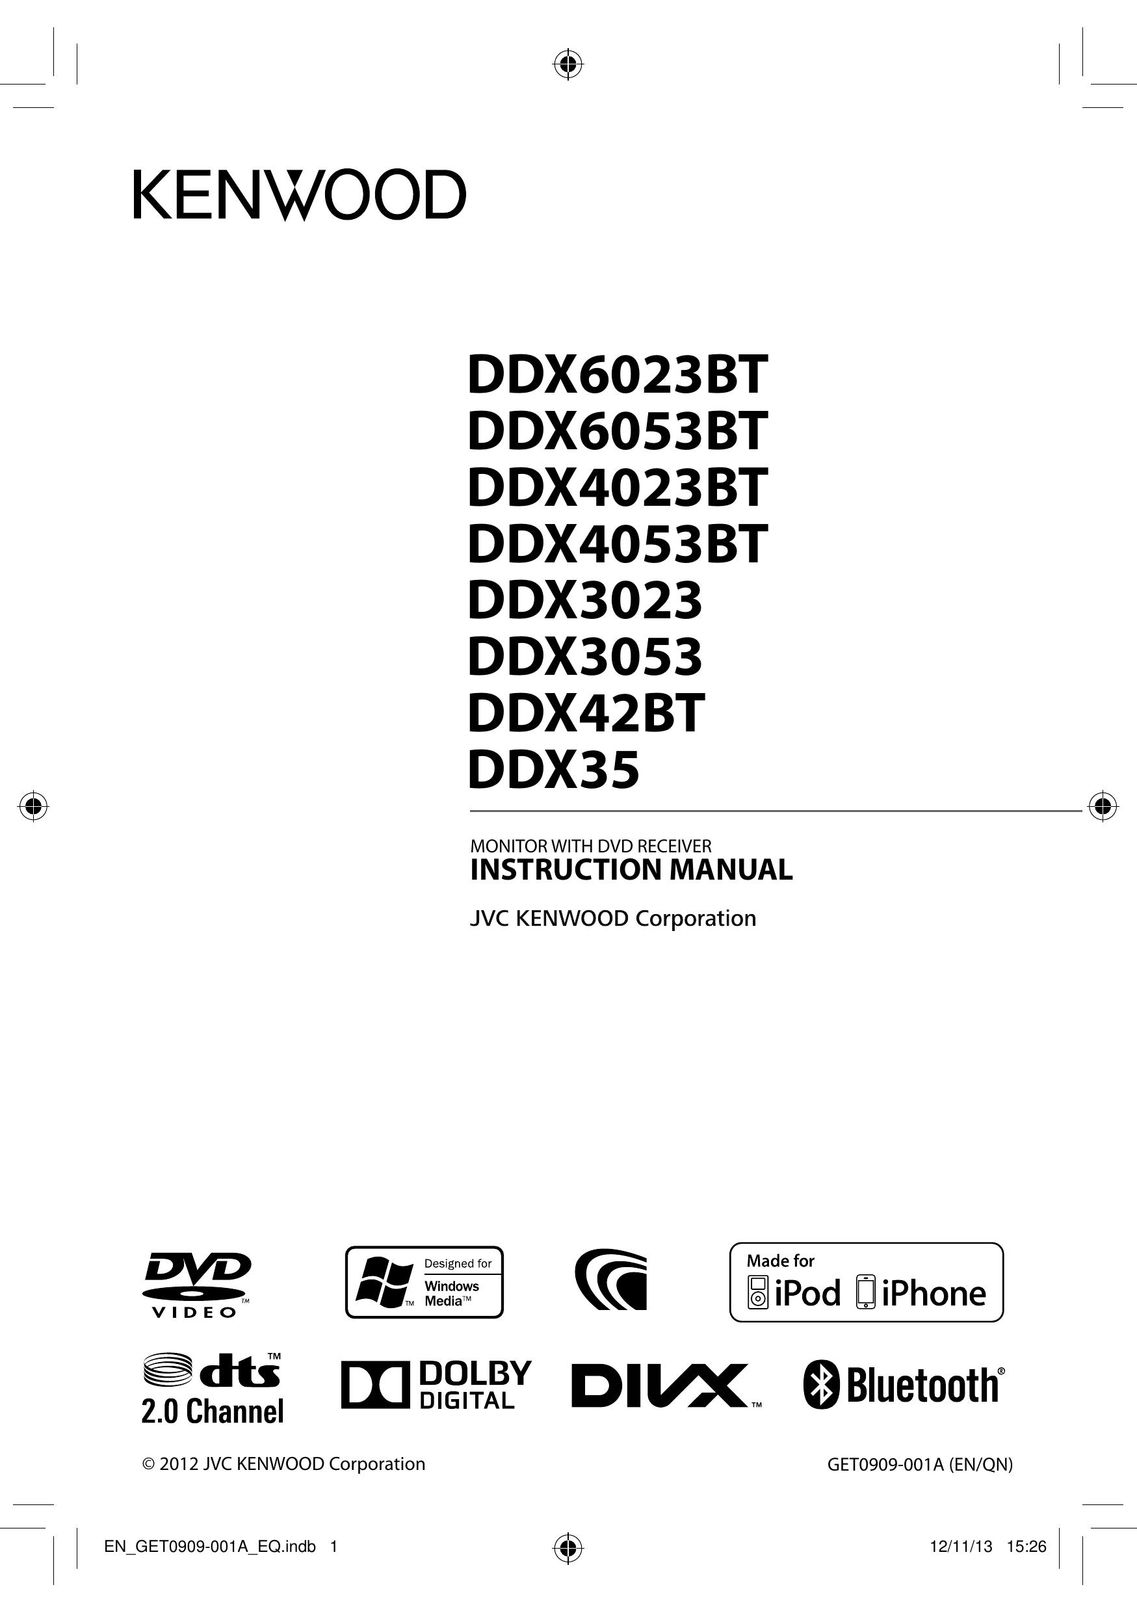 Kenwood DDX3053 Car Video System User Manual